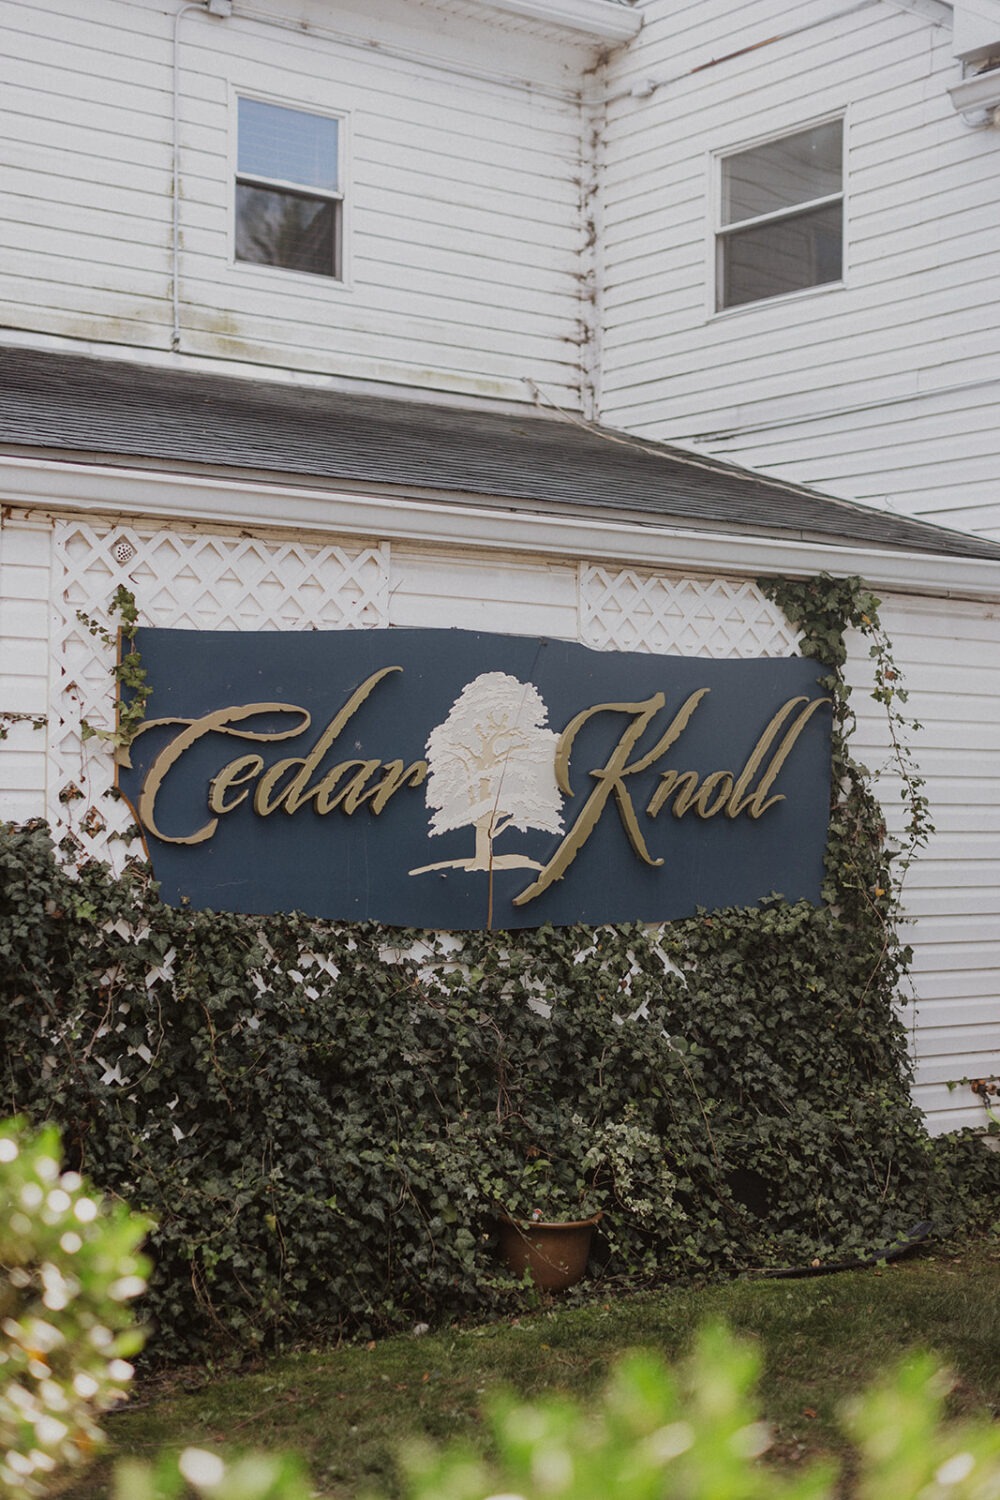 Cedar Knoll Restaurant sign